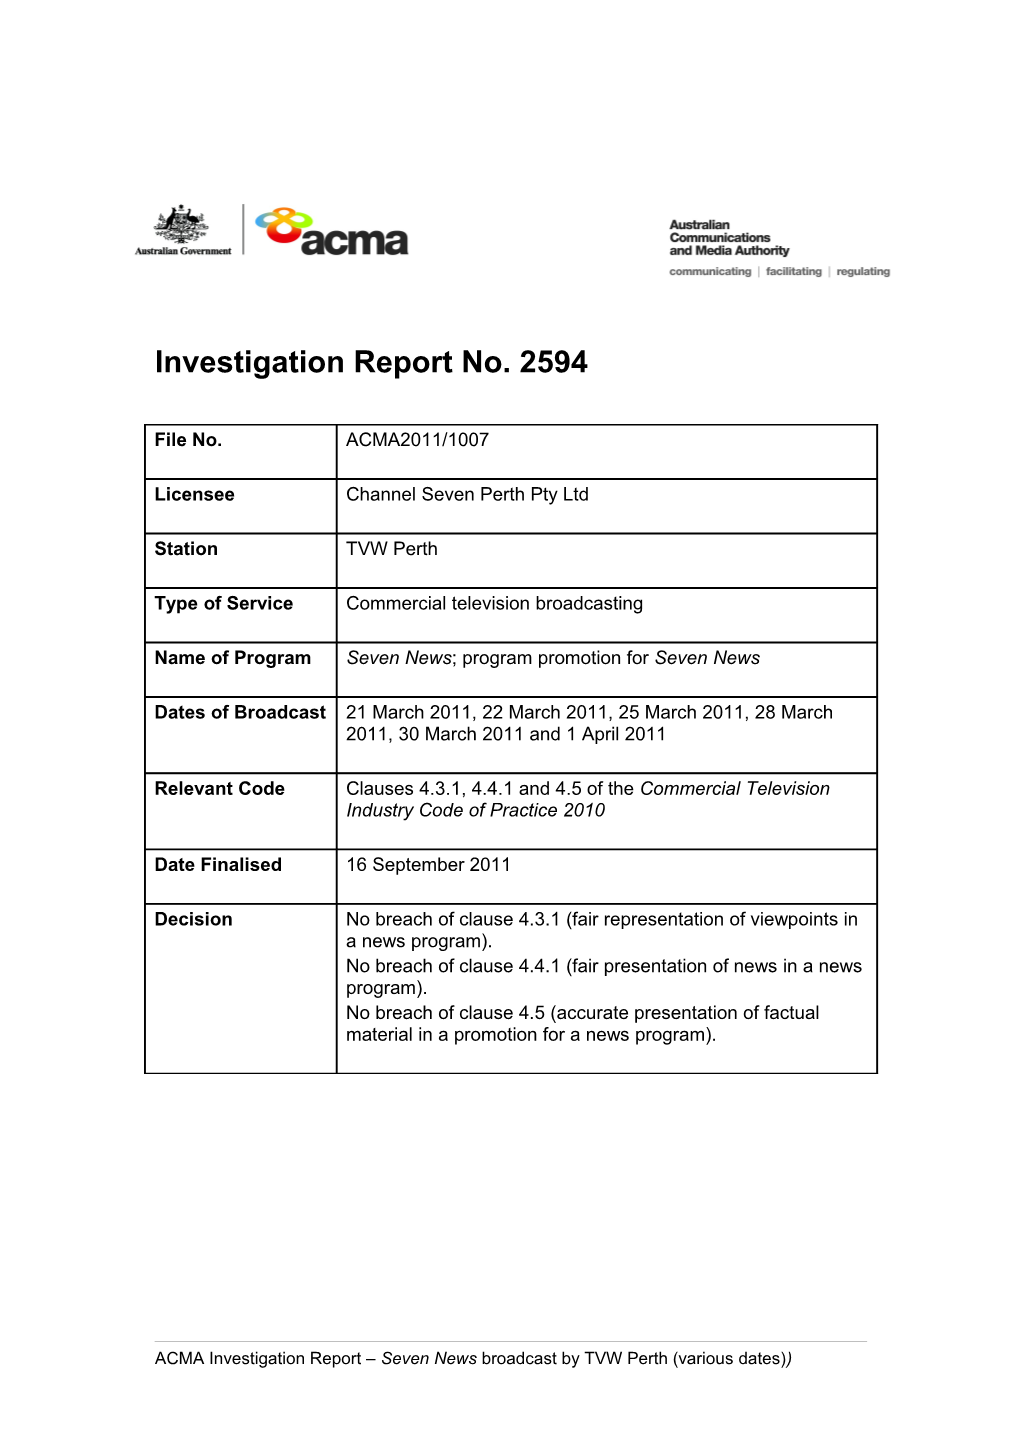 TVW Perth - ACMA Investigation Report 2594